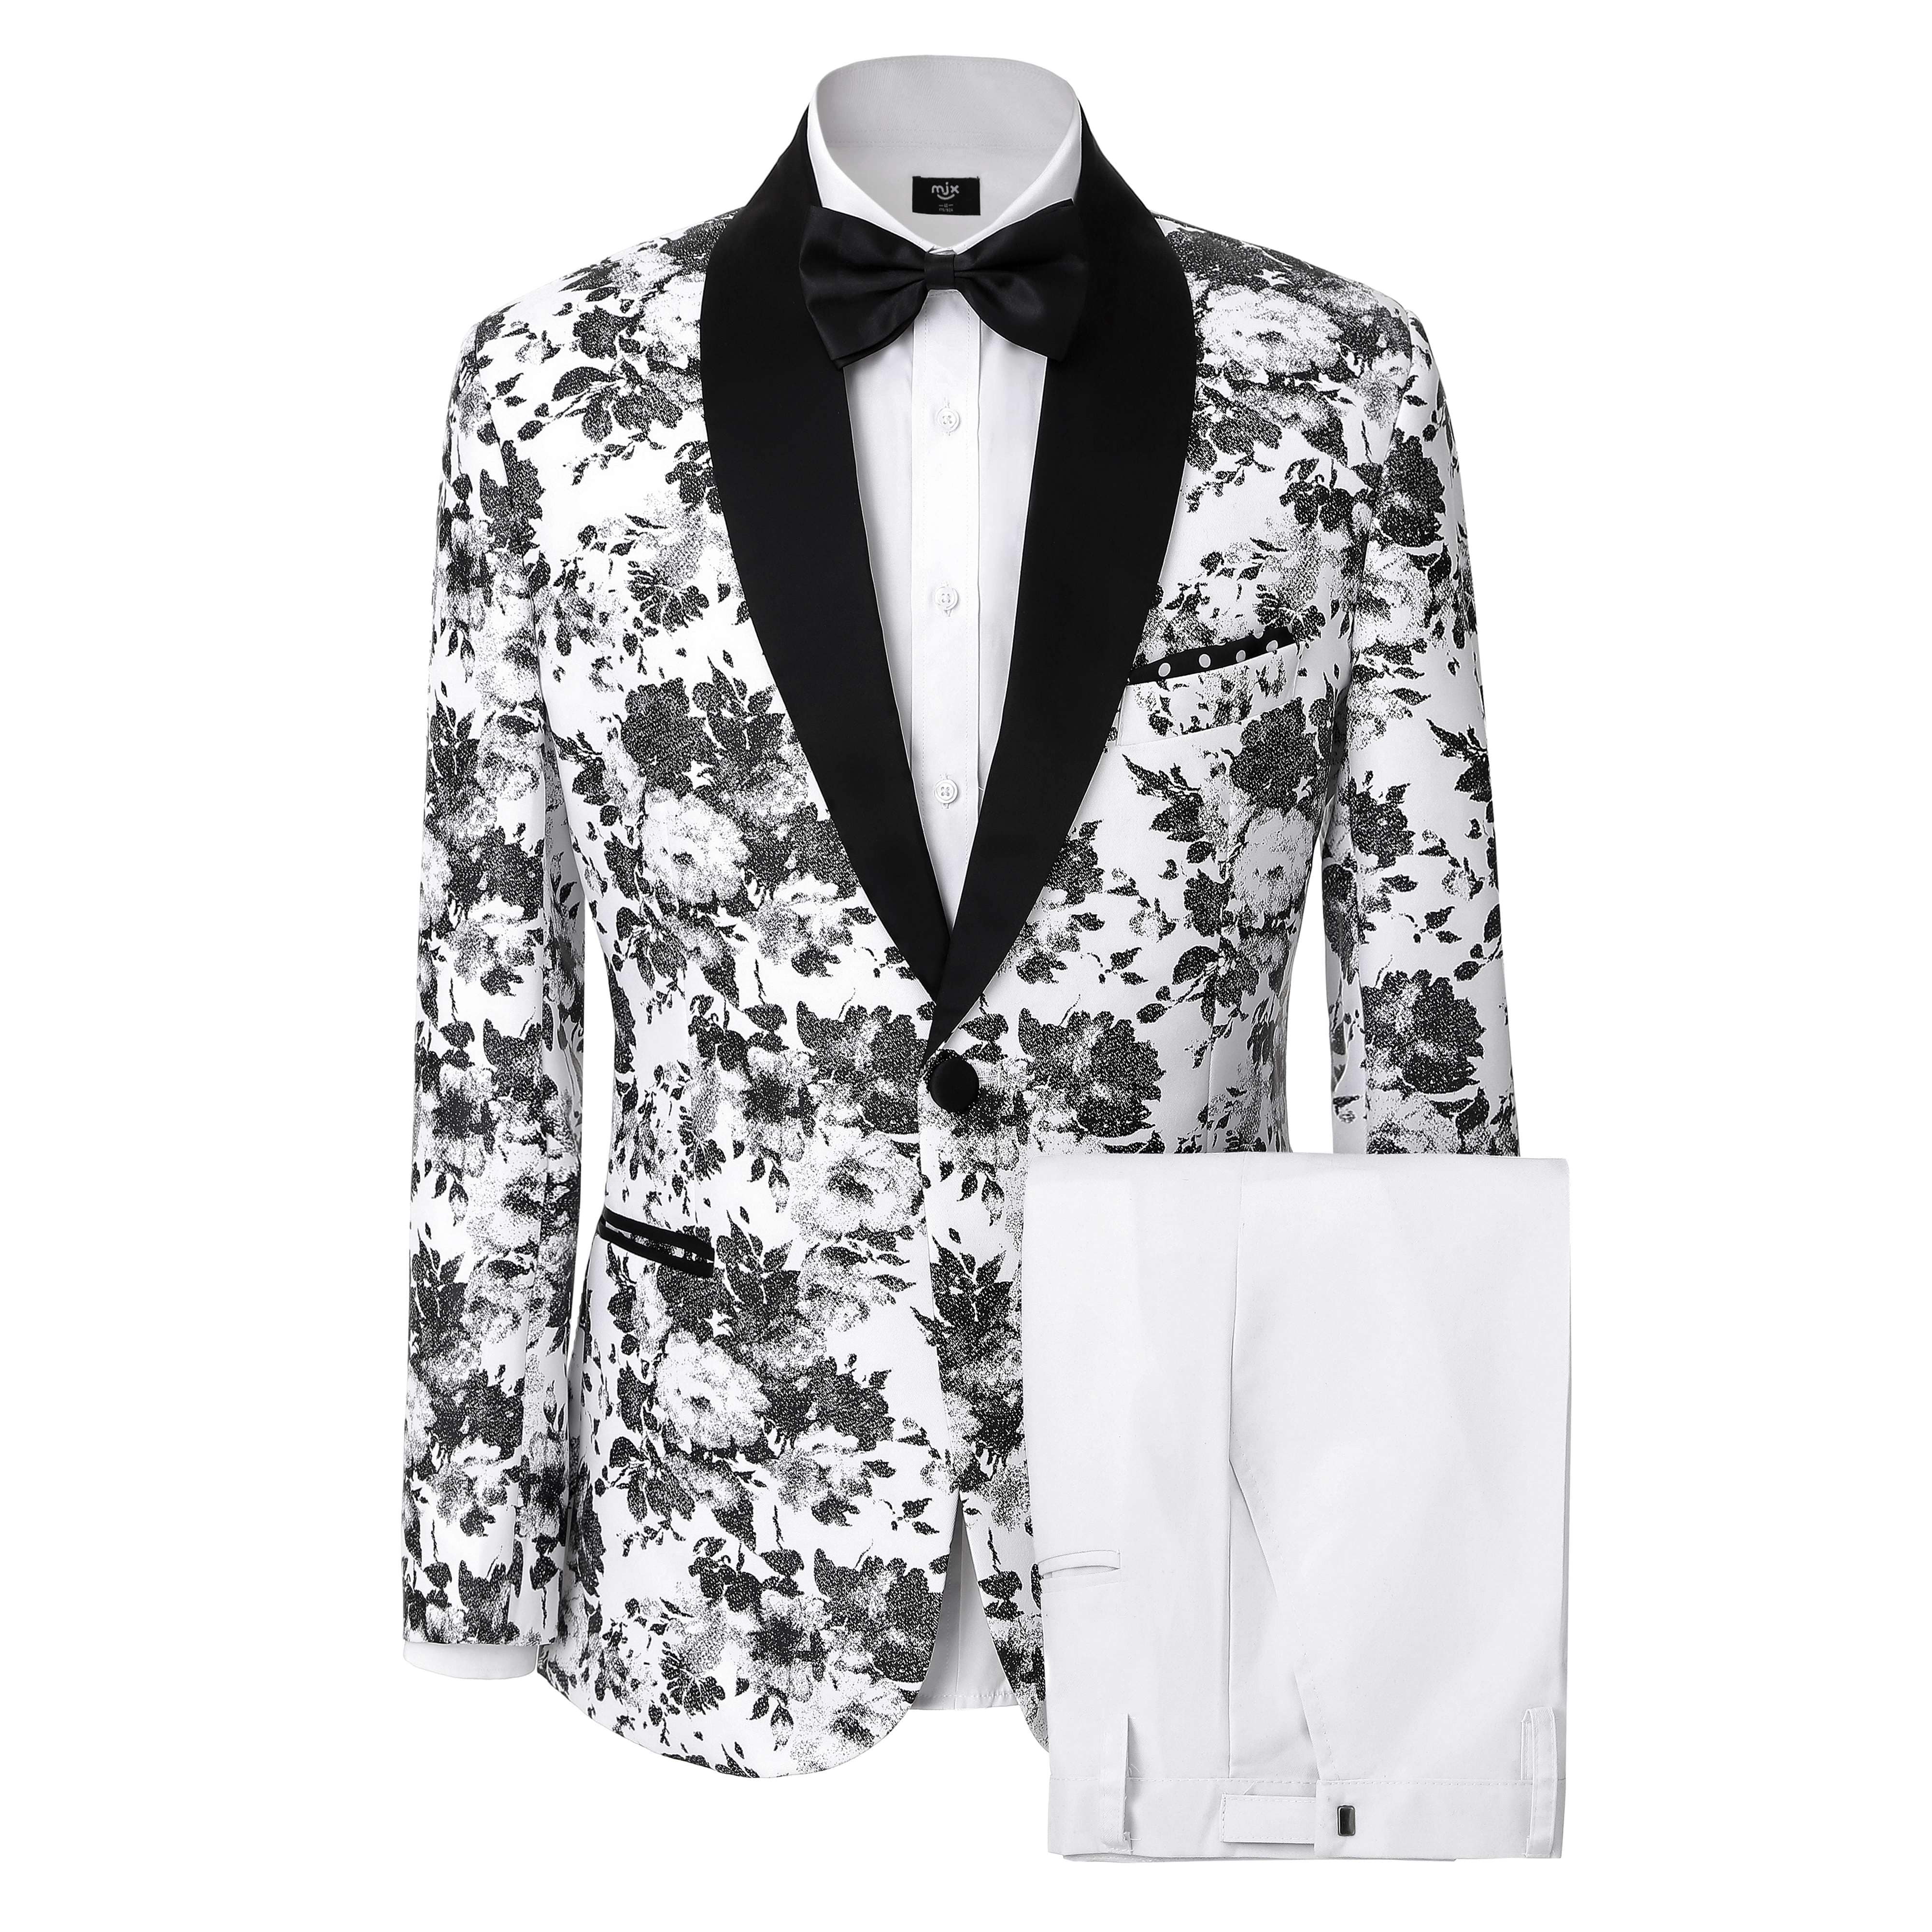 ceehuteey Men's 2 Pieces Patterned Fashion Peak Lapel Floral Tuxedos And Wedding(Blazer+Pants)